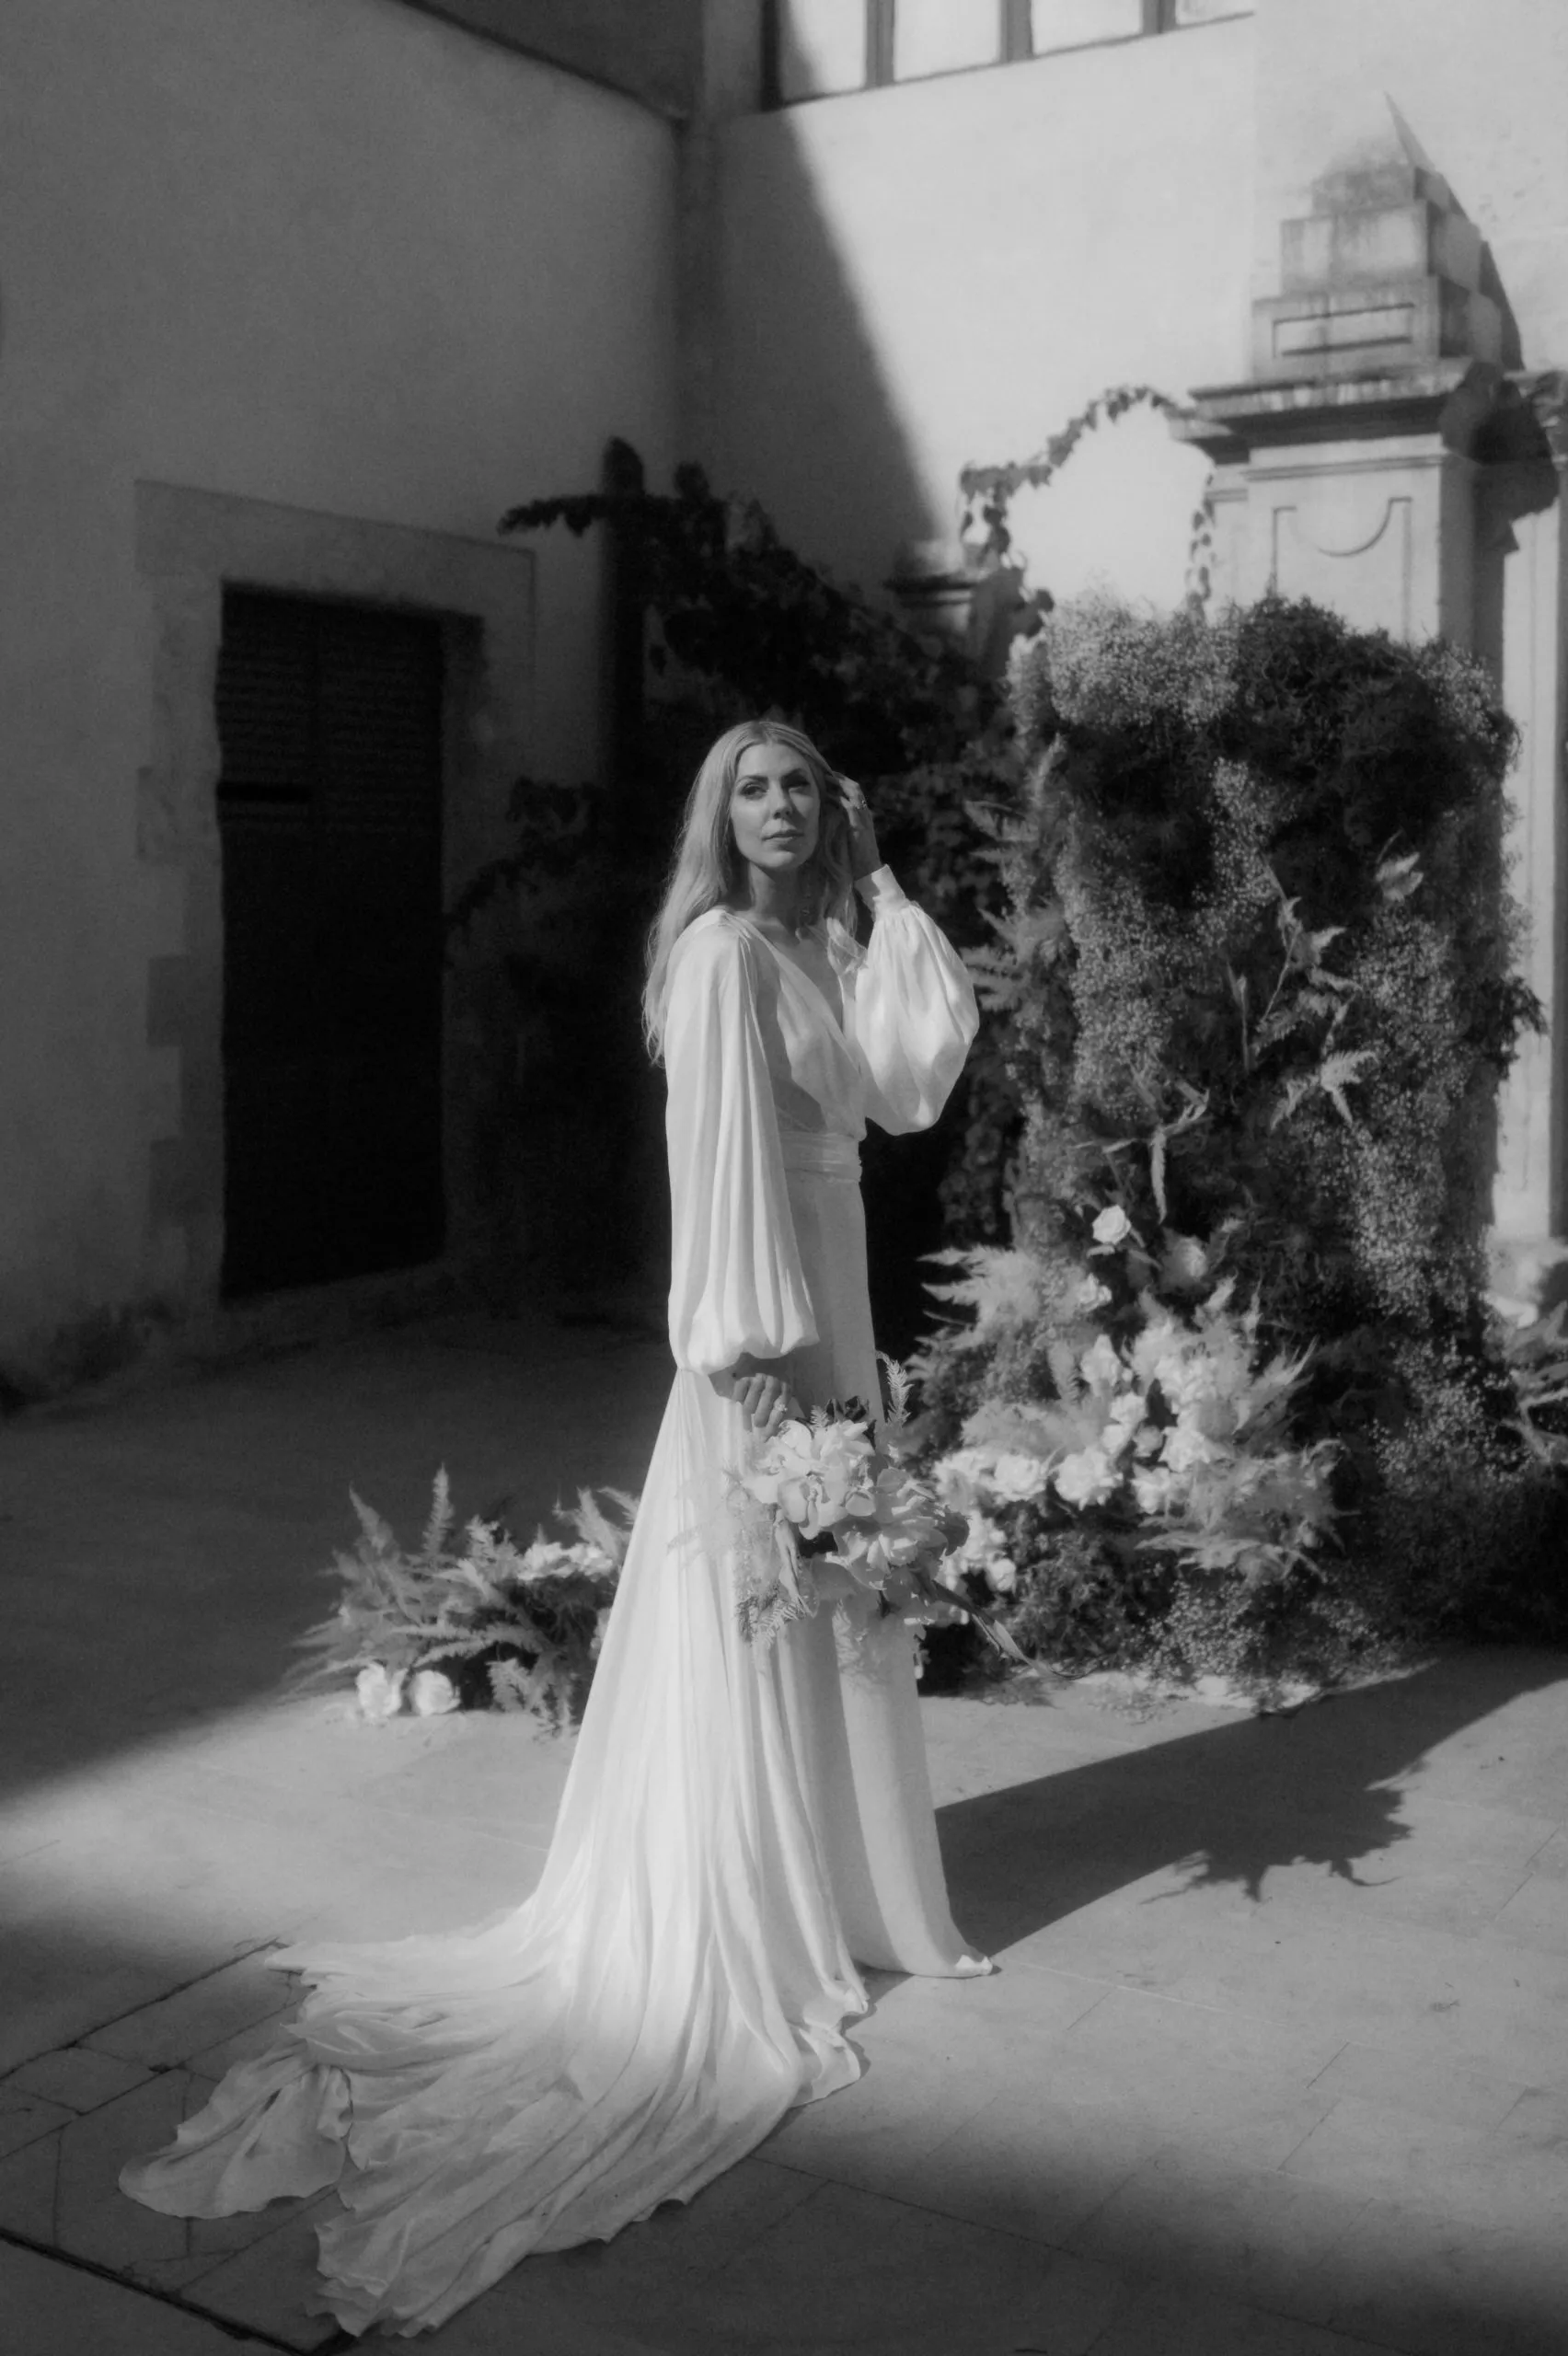 portrait of a bride standing alone holding a bouquet